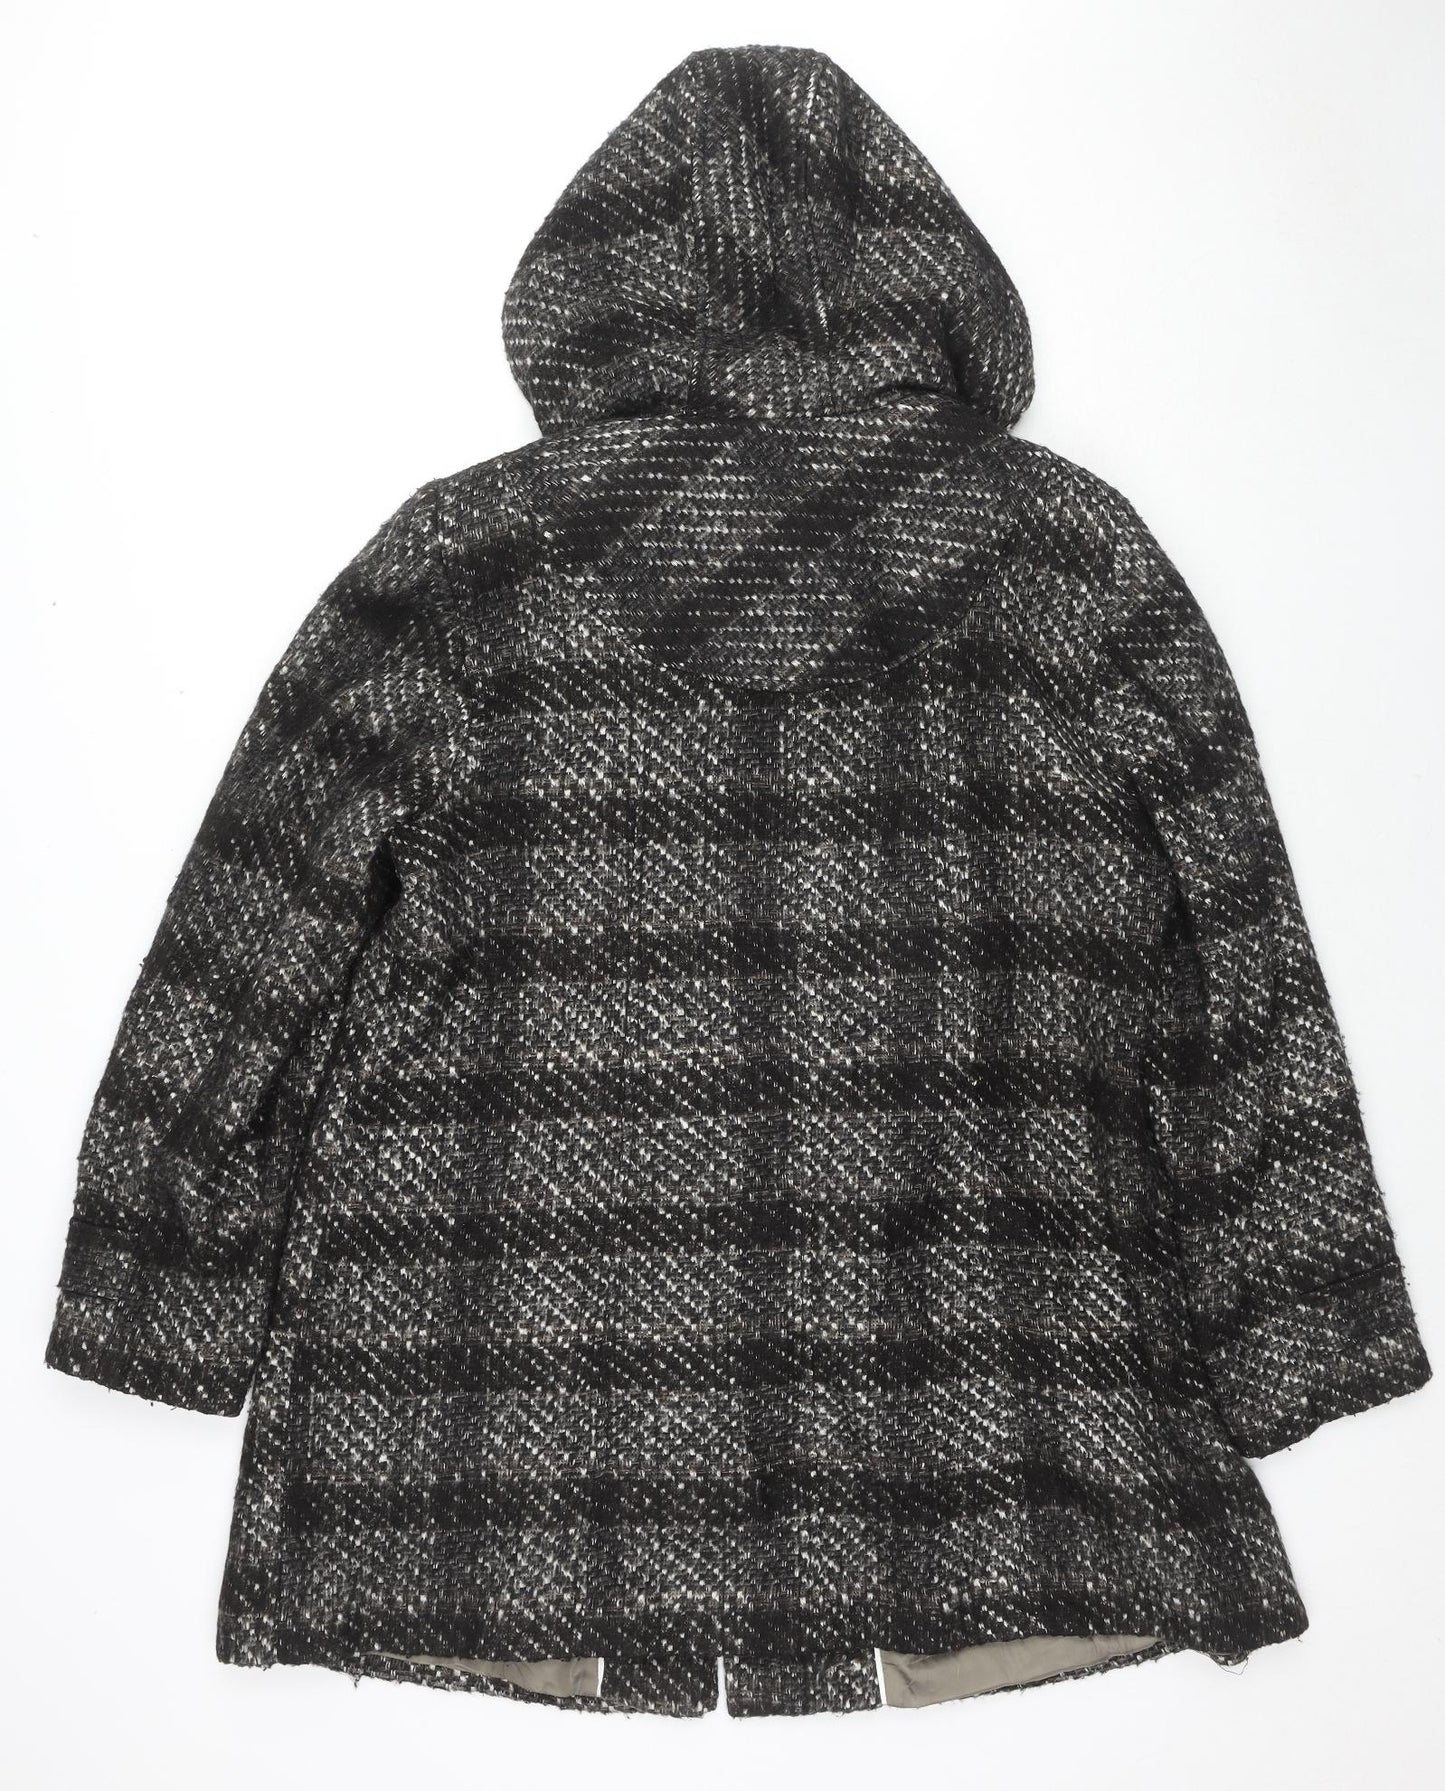 NEXT Womens Black Geometric Overcoat Coat Size 20 Zip